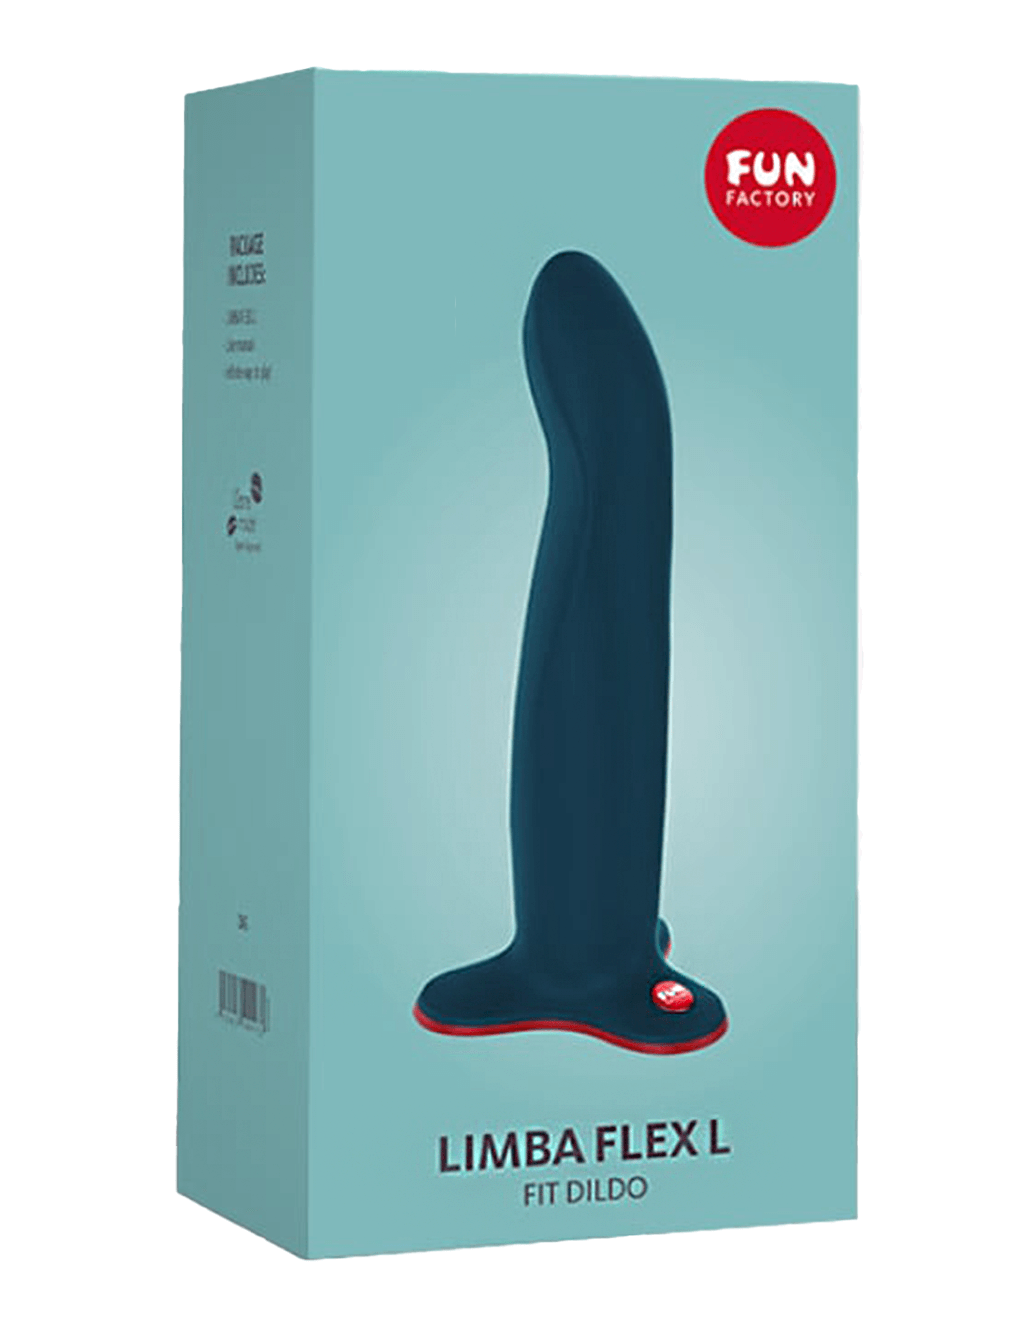 Fun Factory Limba Flex L - Box Front